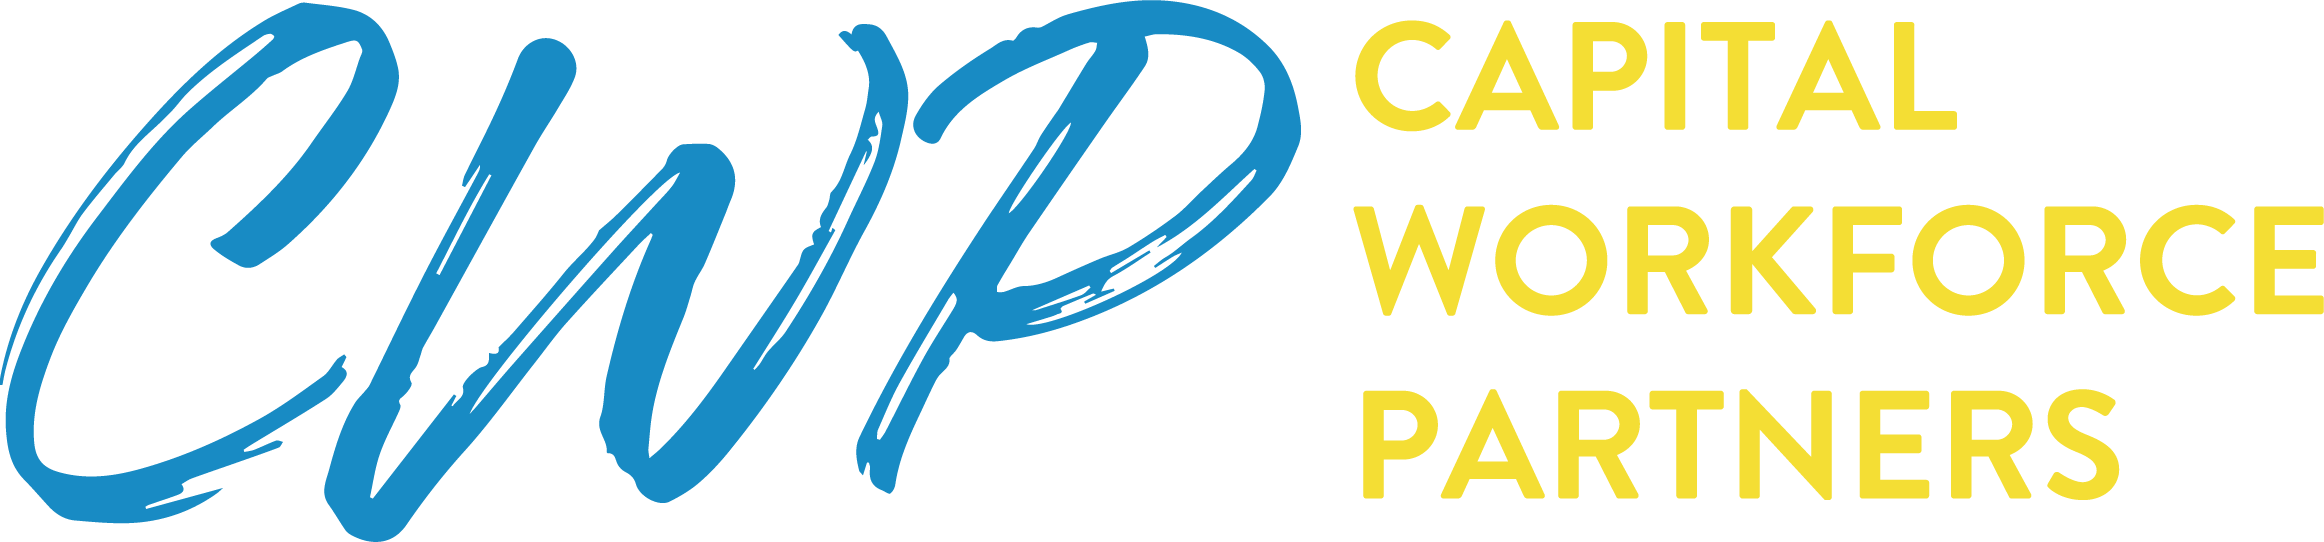 CWP Capital Workforce Partners